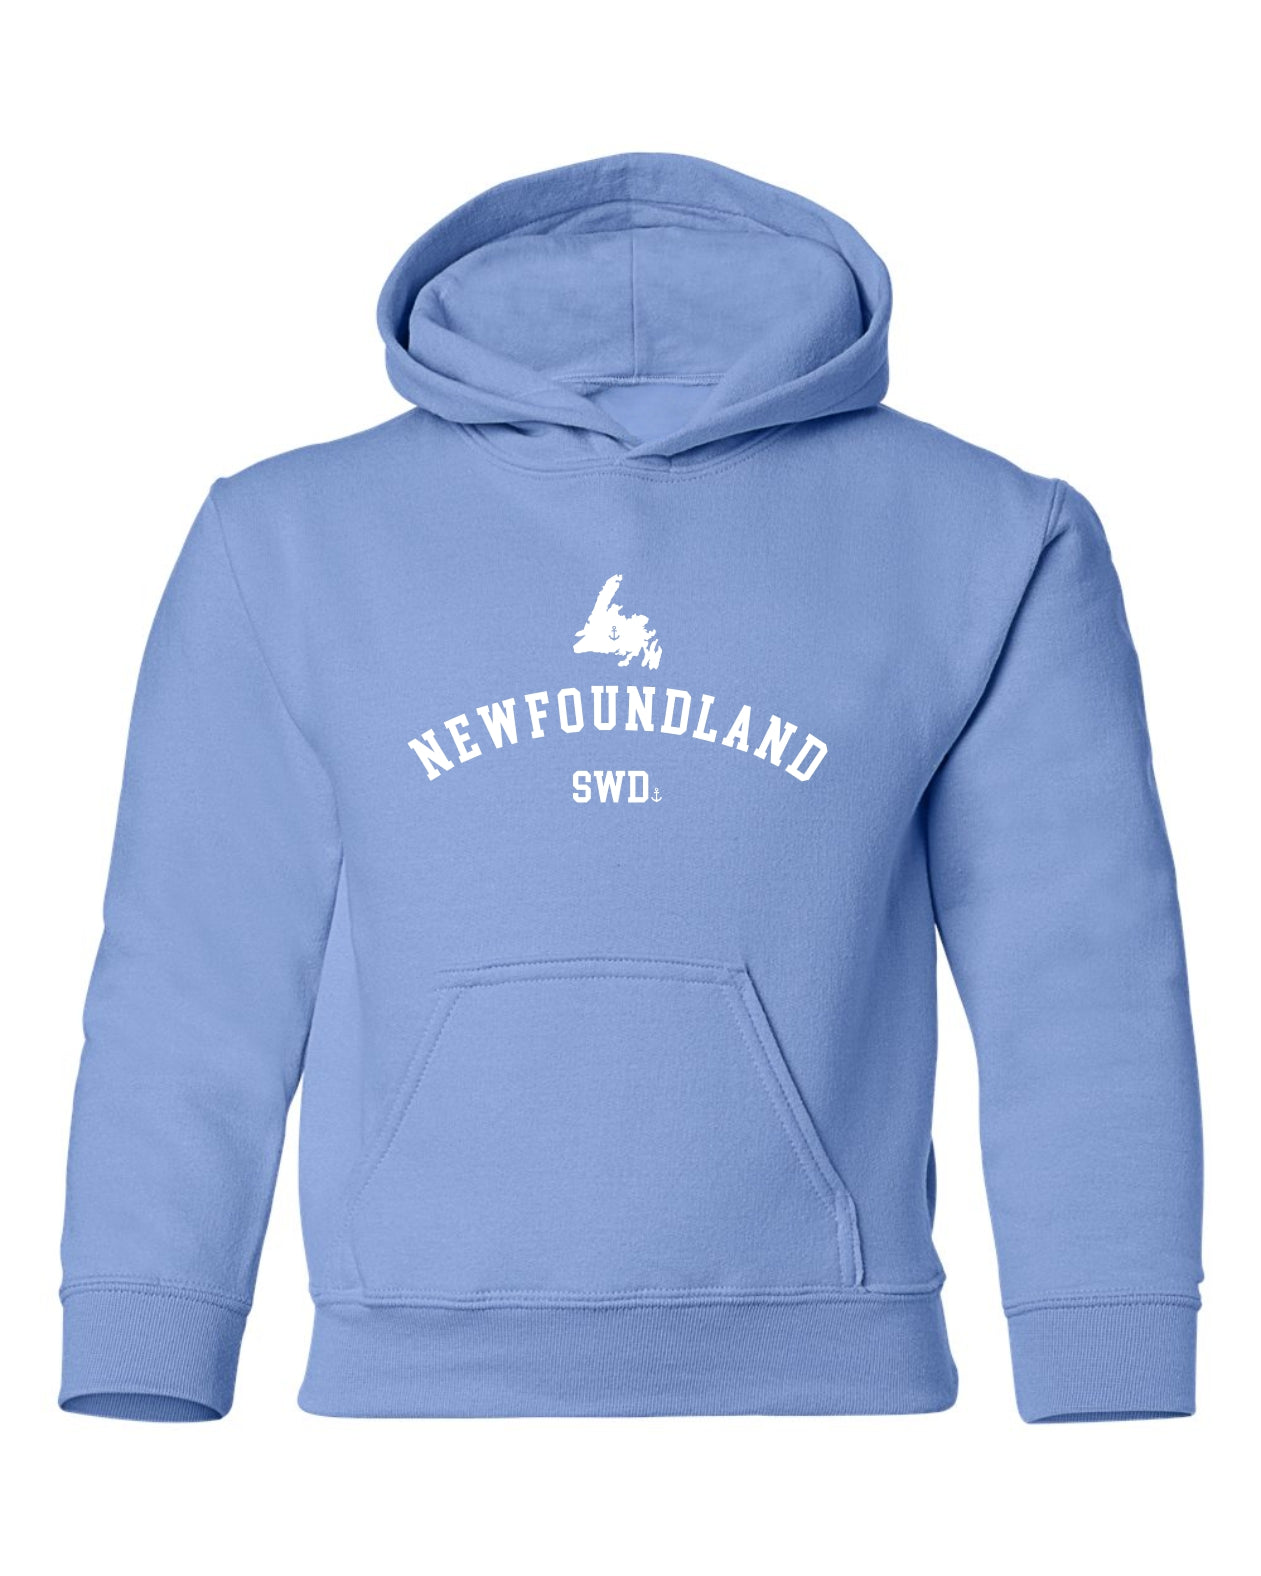 "Newfoundland - SWD" Youth Hoodie